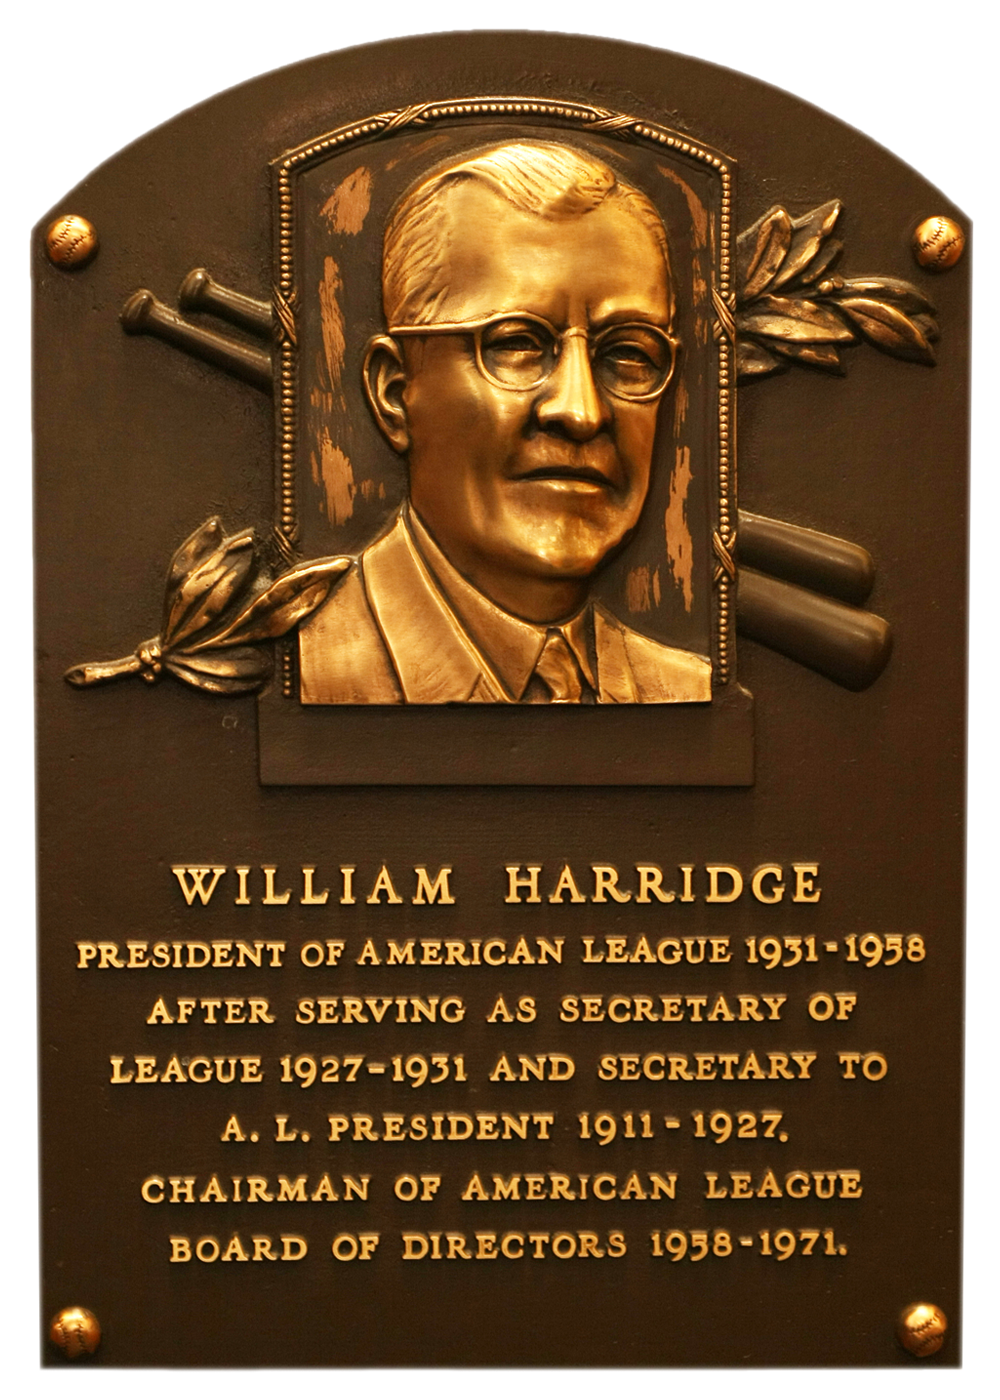 Will Harridge Hall of Fame plaque